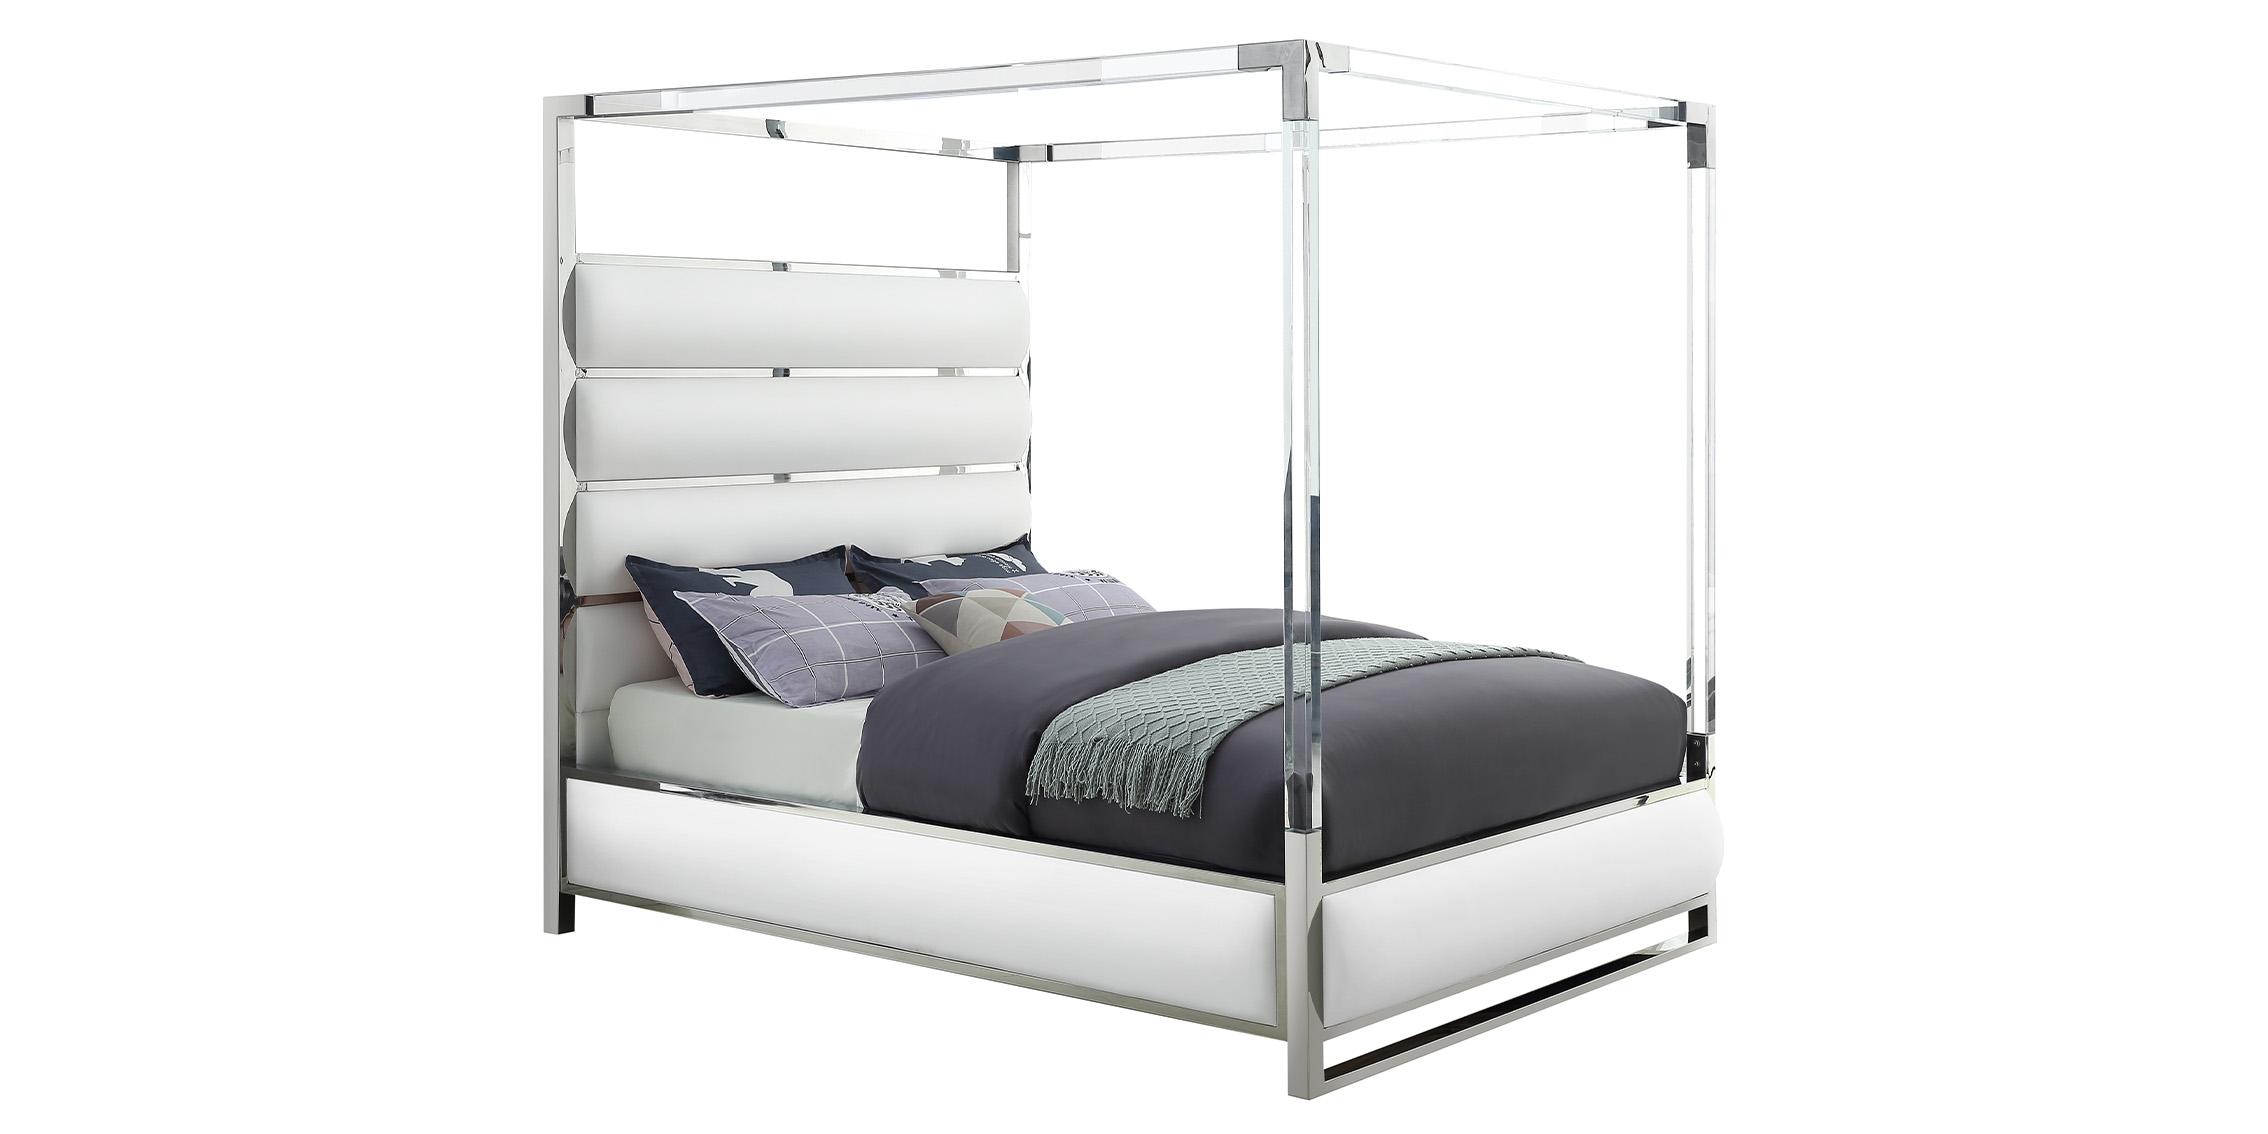 Contemporary Canopy Bed ENCORE White-Q EncoreWhite-Q in White Faux Leather